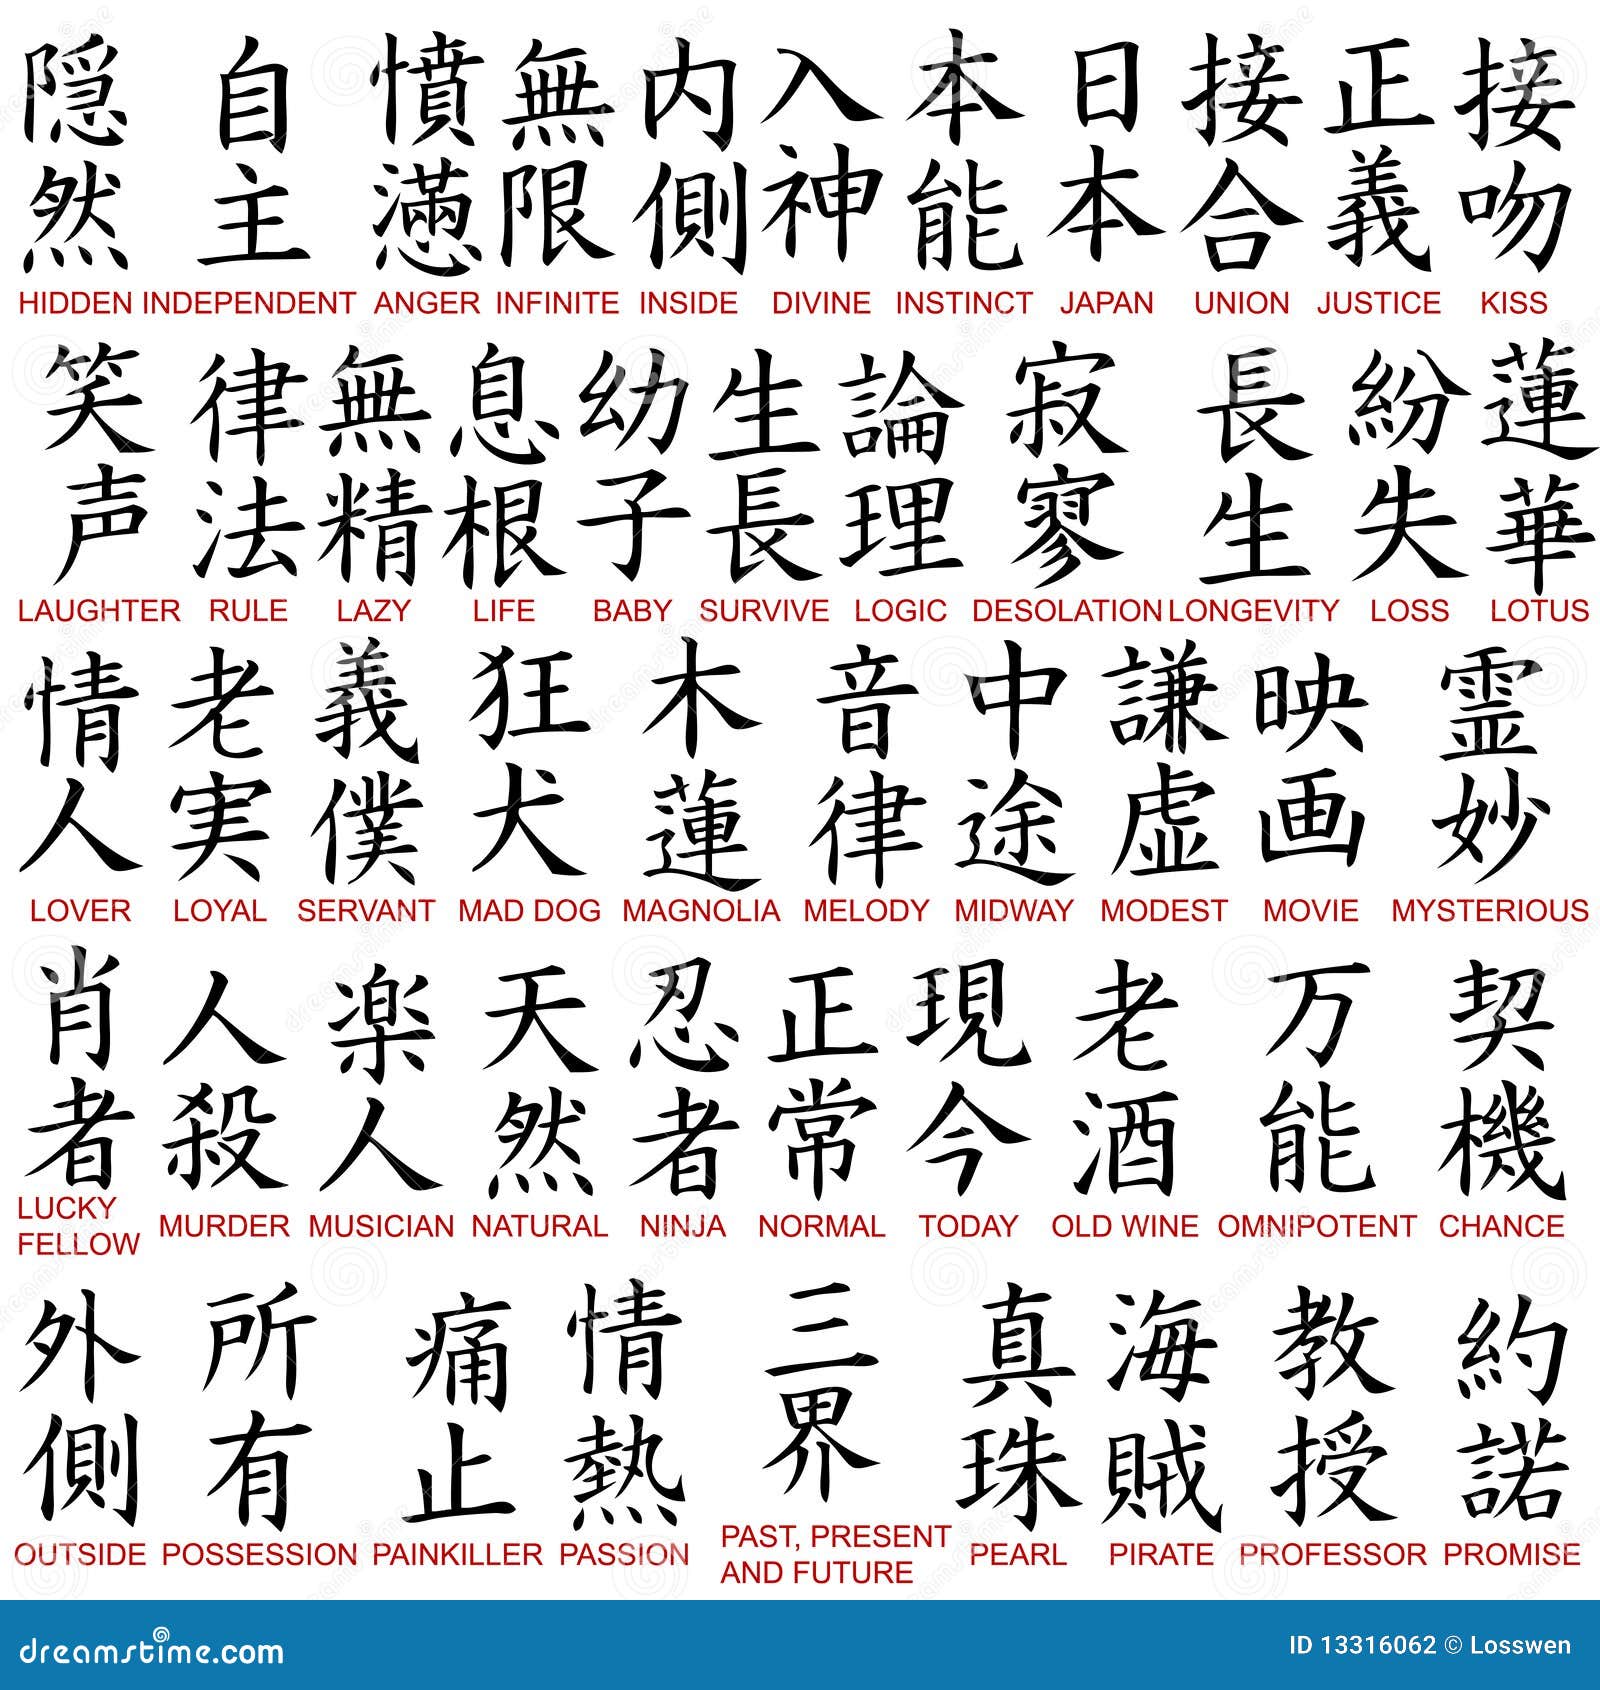 Kanji symbols stock vector. Illustration of loss, lotus - 13316062